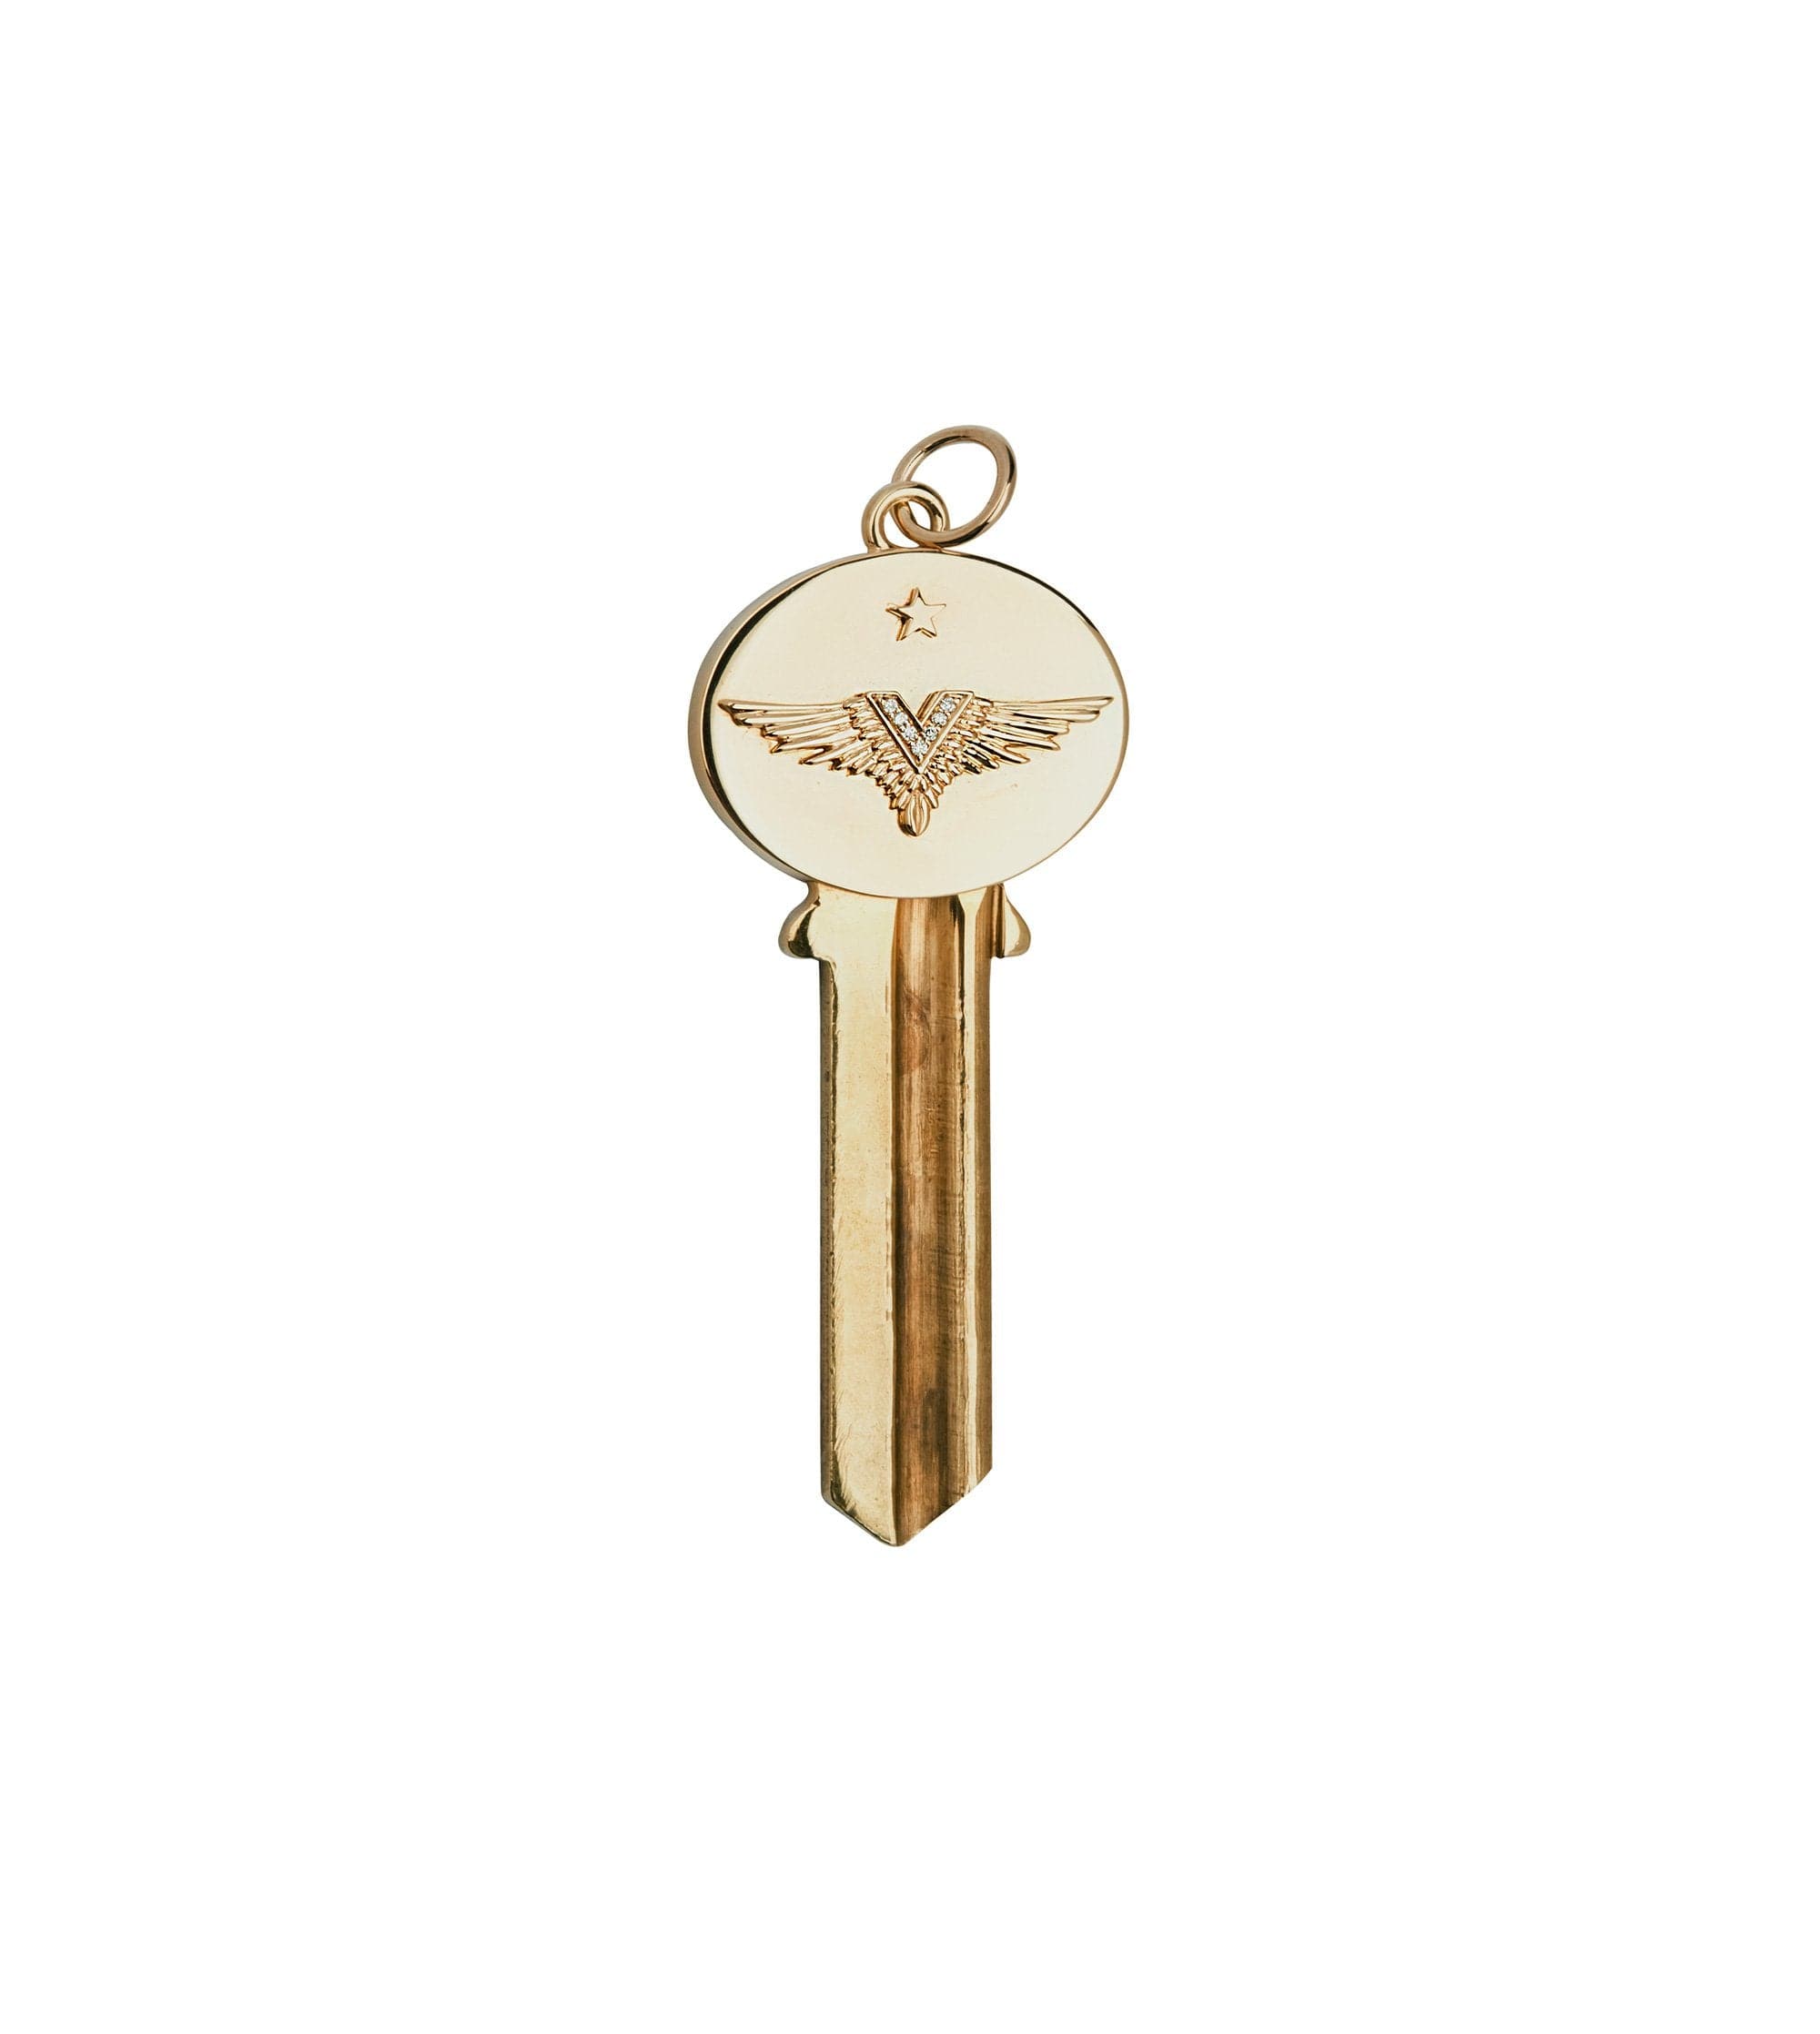 Vivacity : Golden Key